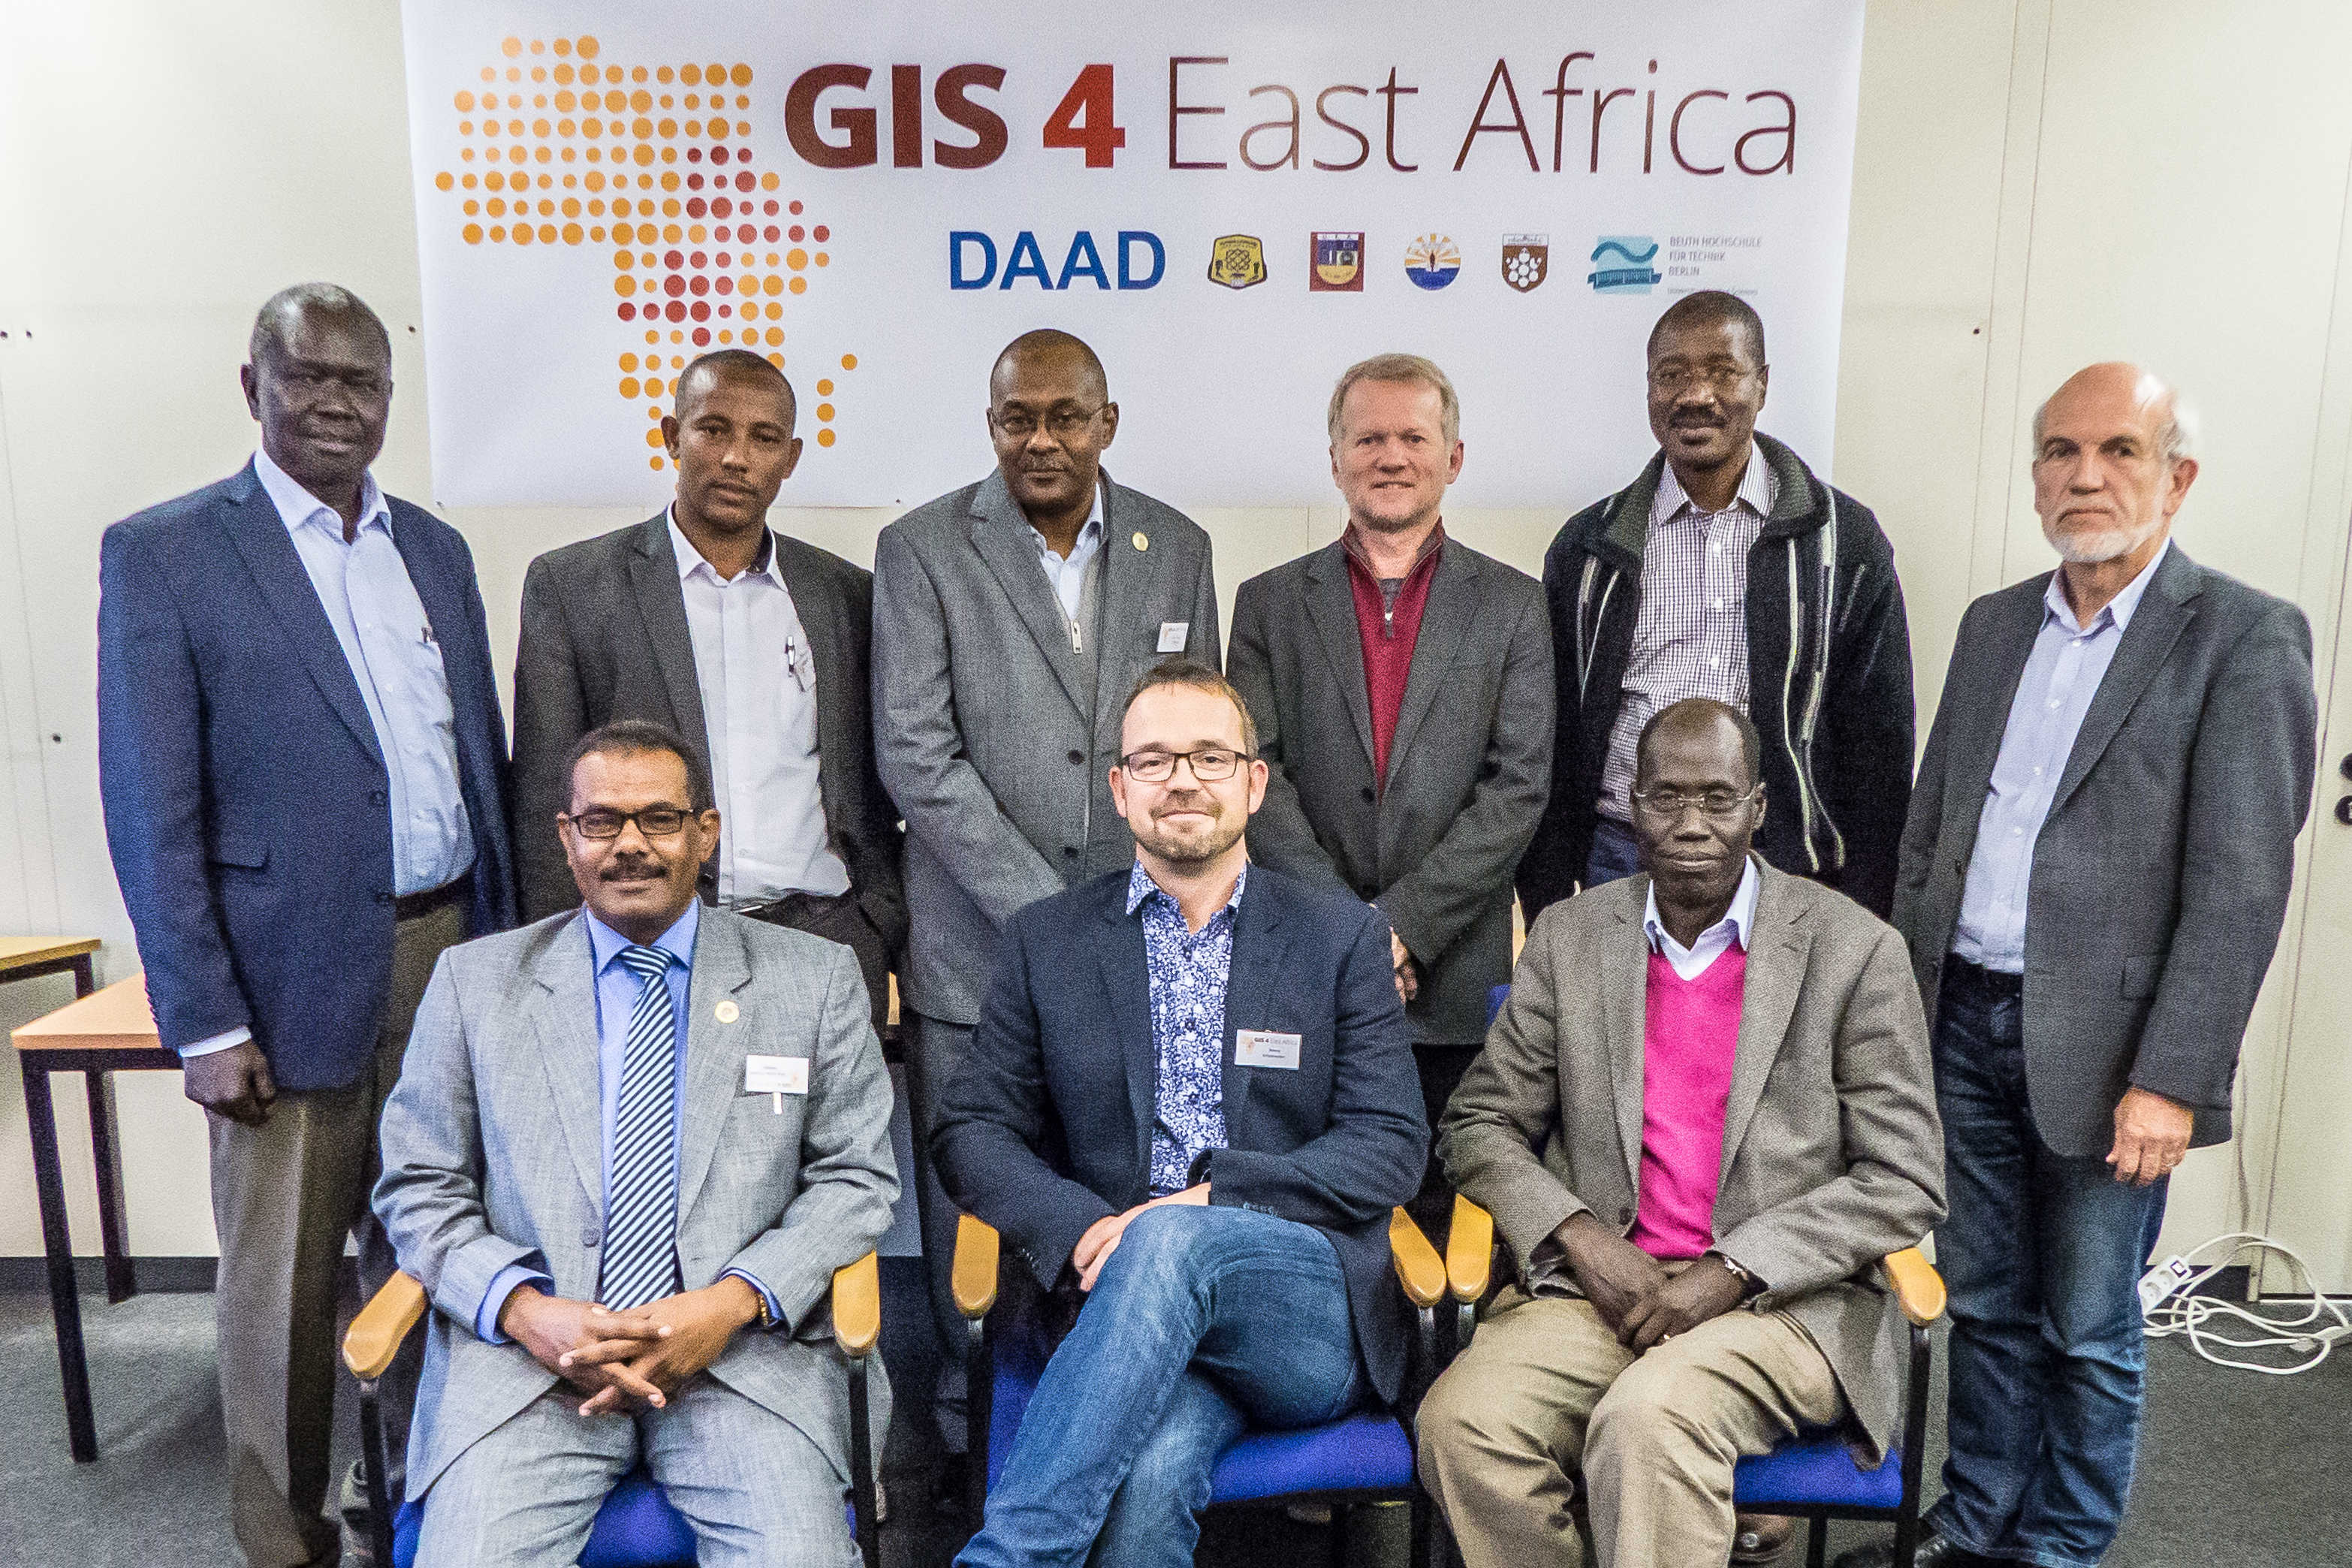 Besuch aus Ostafrika zum Start des Programms GIS 4 East Africa (Foto:Vigerske)